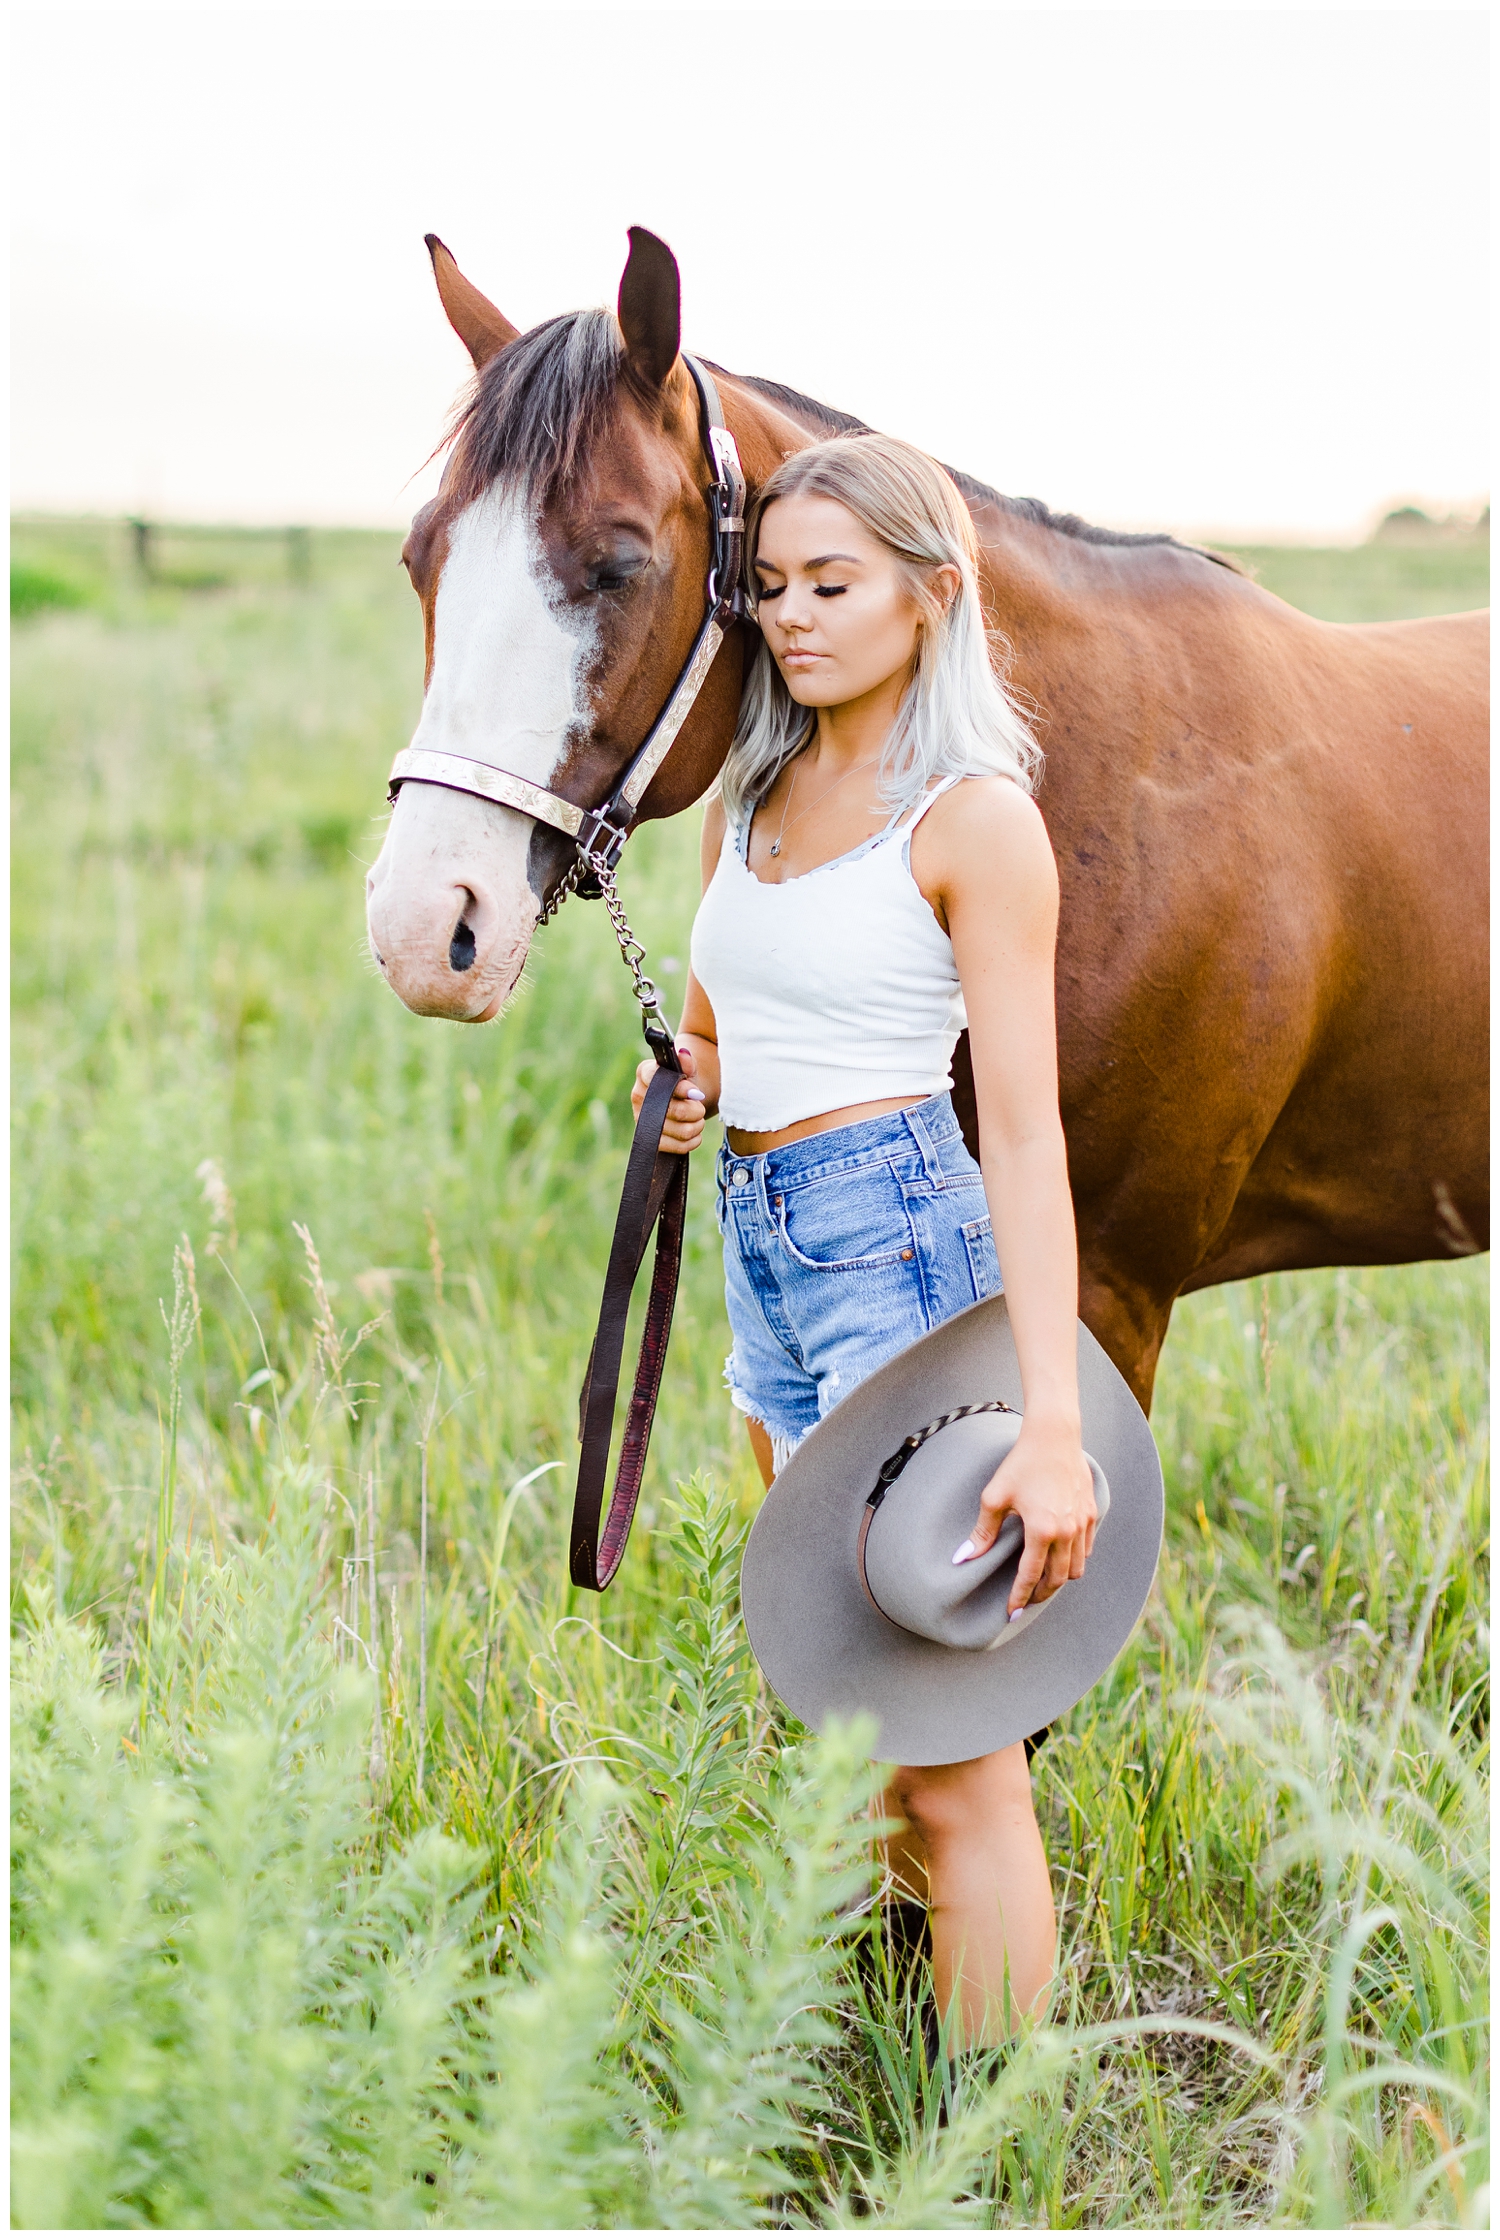 Addison snuggles her horse in a grassy field | CB Studio